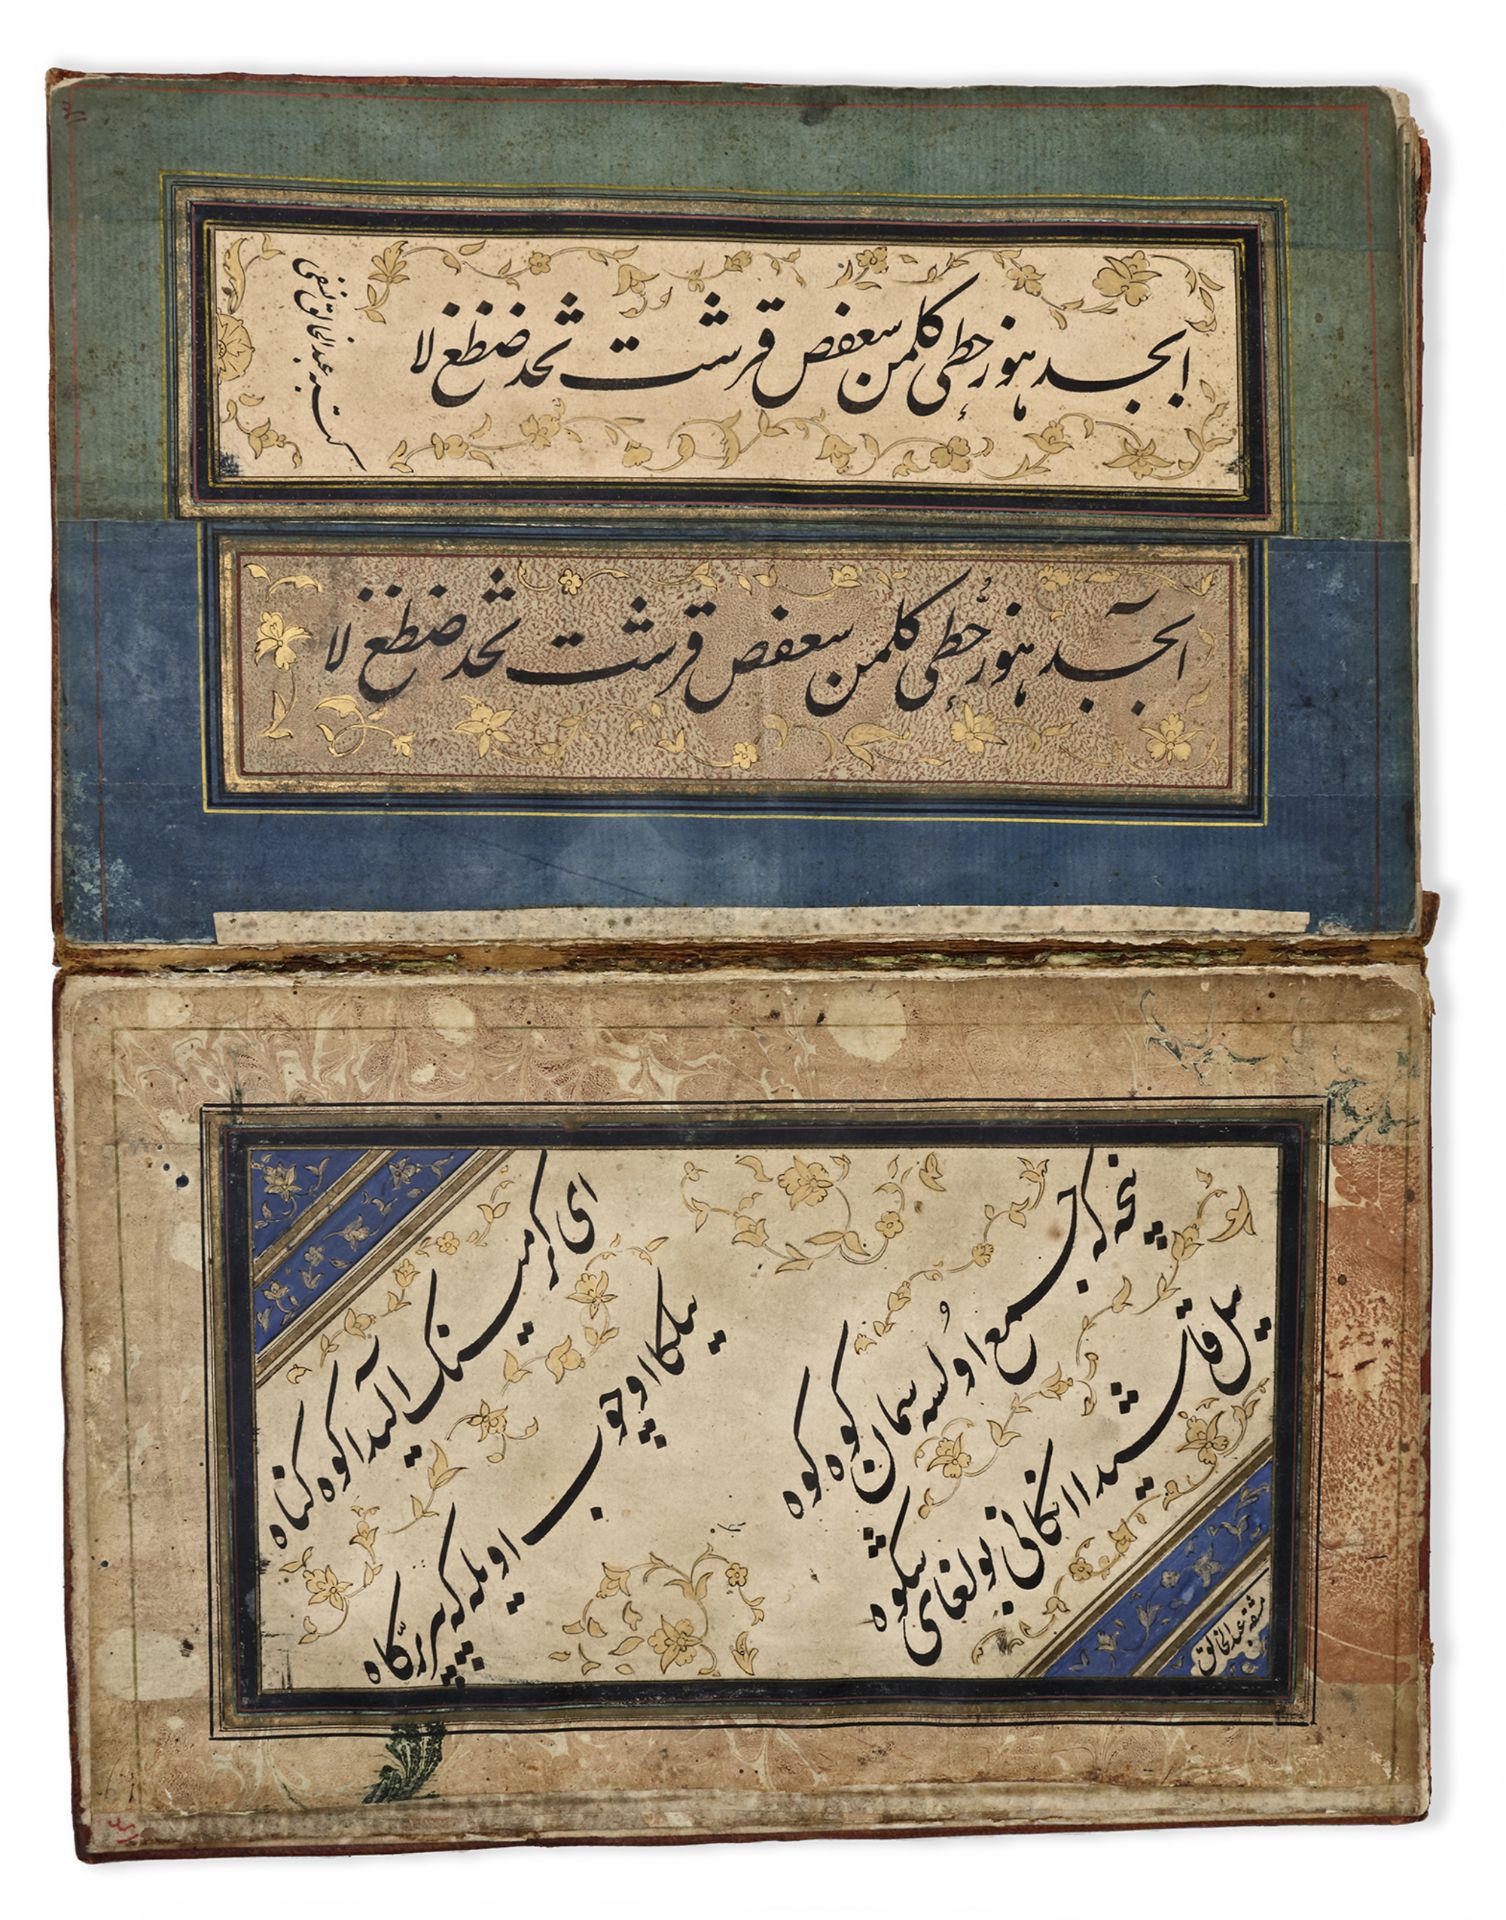 AN OTTOMAN ILLUMINATED CONCERTINA-FORM CALLIGRAPHIC MURAQQA, TURKEY, 18TH CENTURY